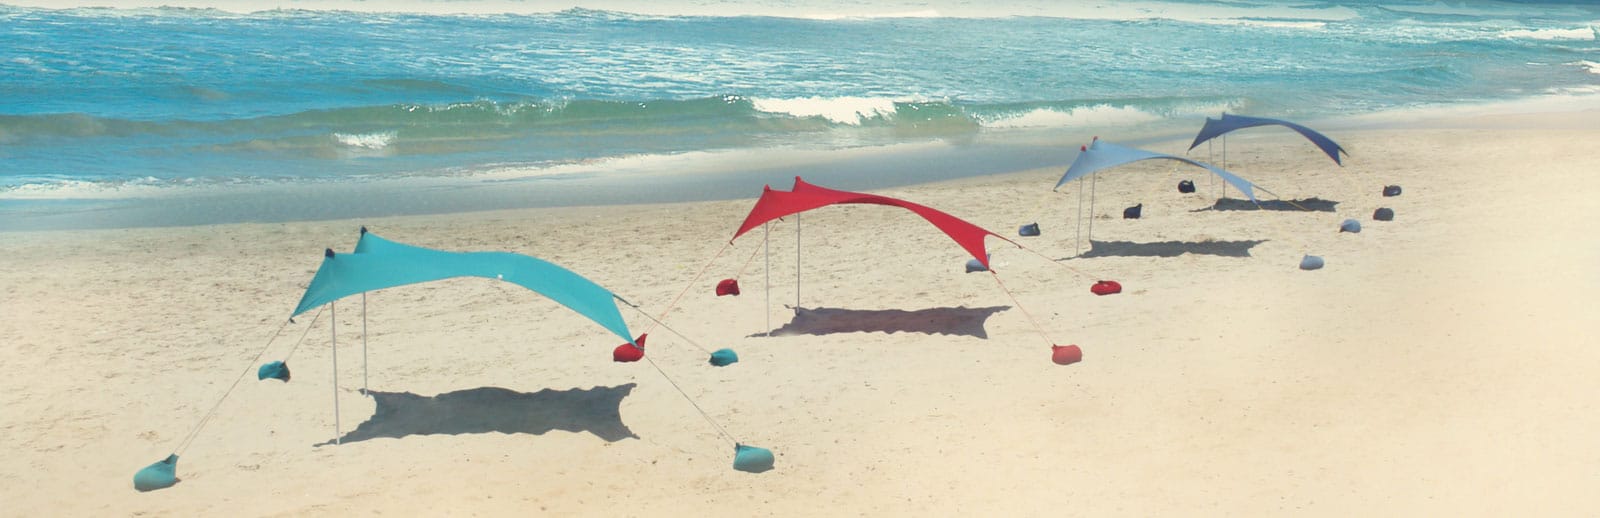 Cyprus Otentik beach tents